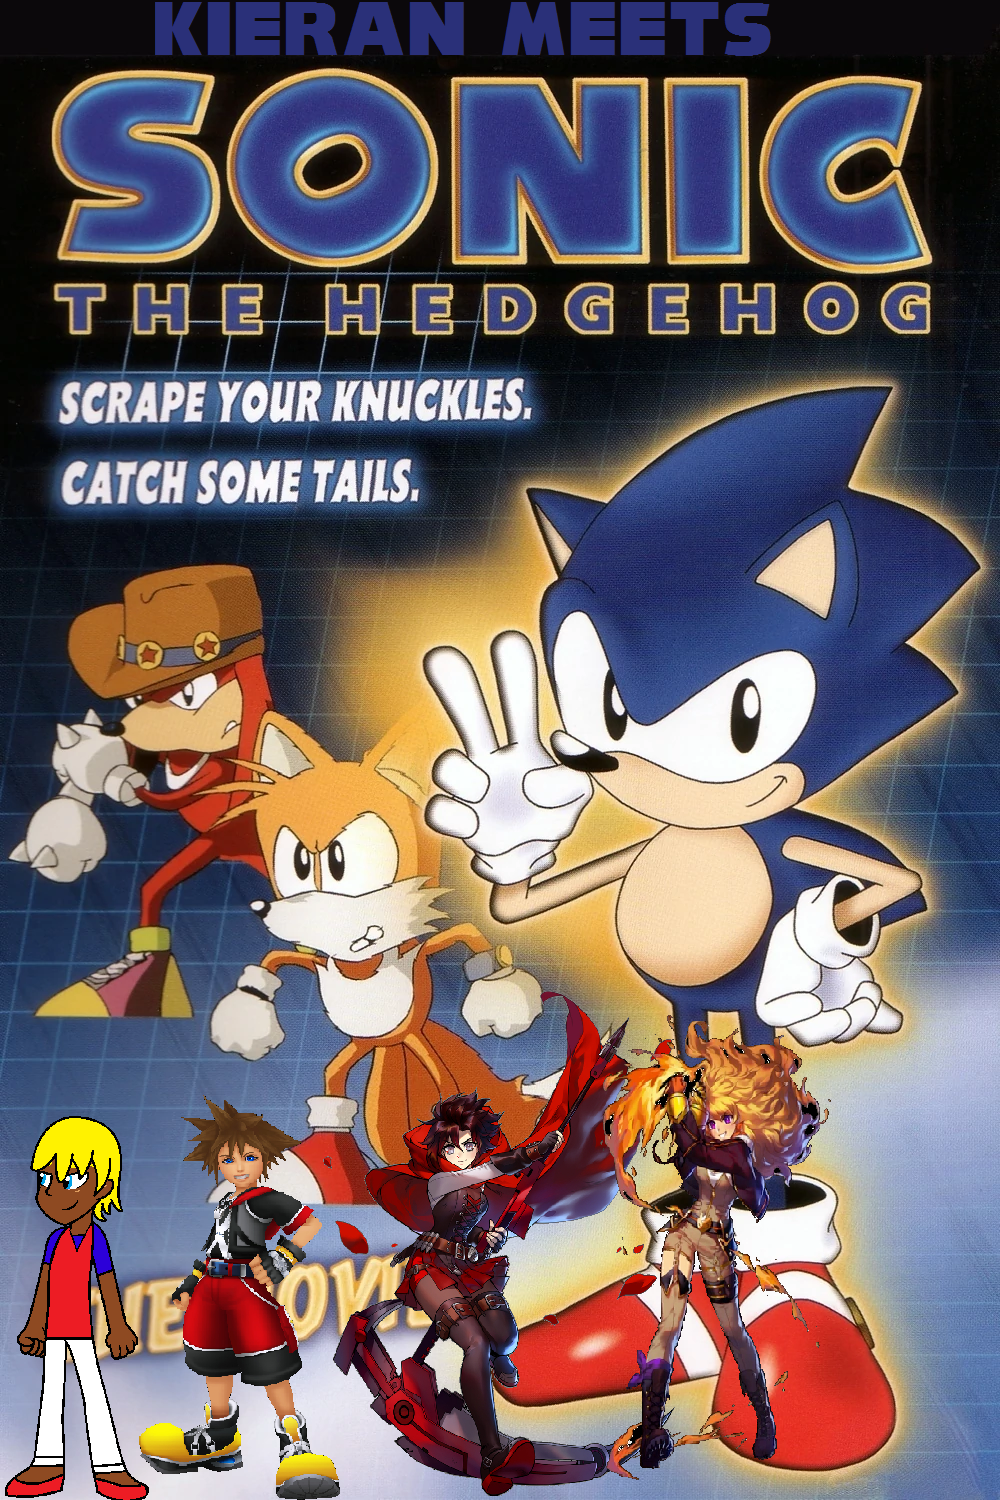 Kieran Meets Sonic The Hedgehog (2020), Pooh's Adventures Wiki